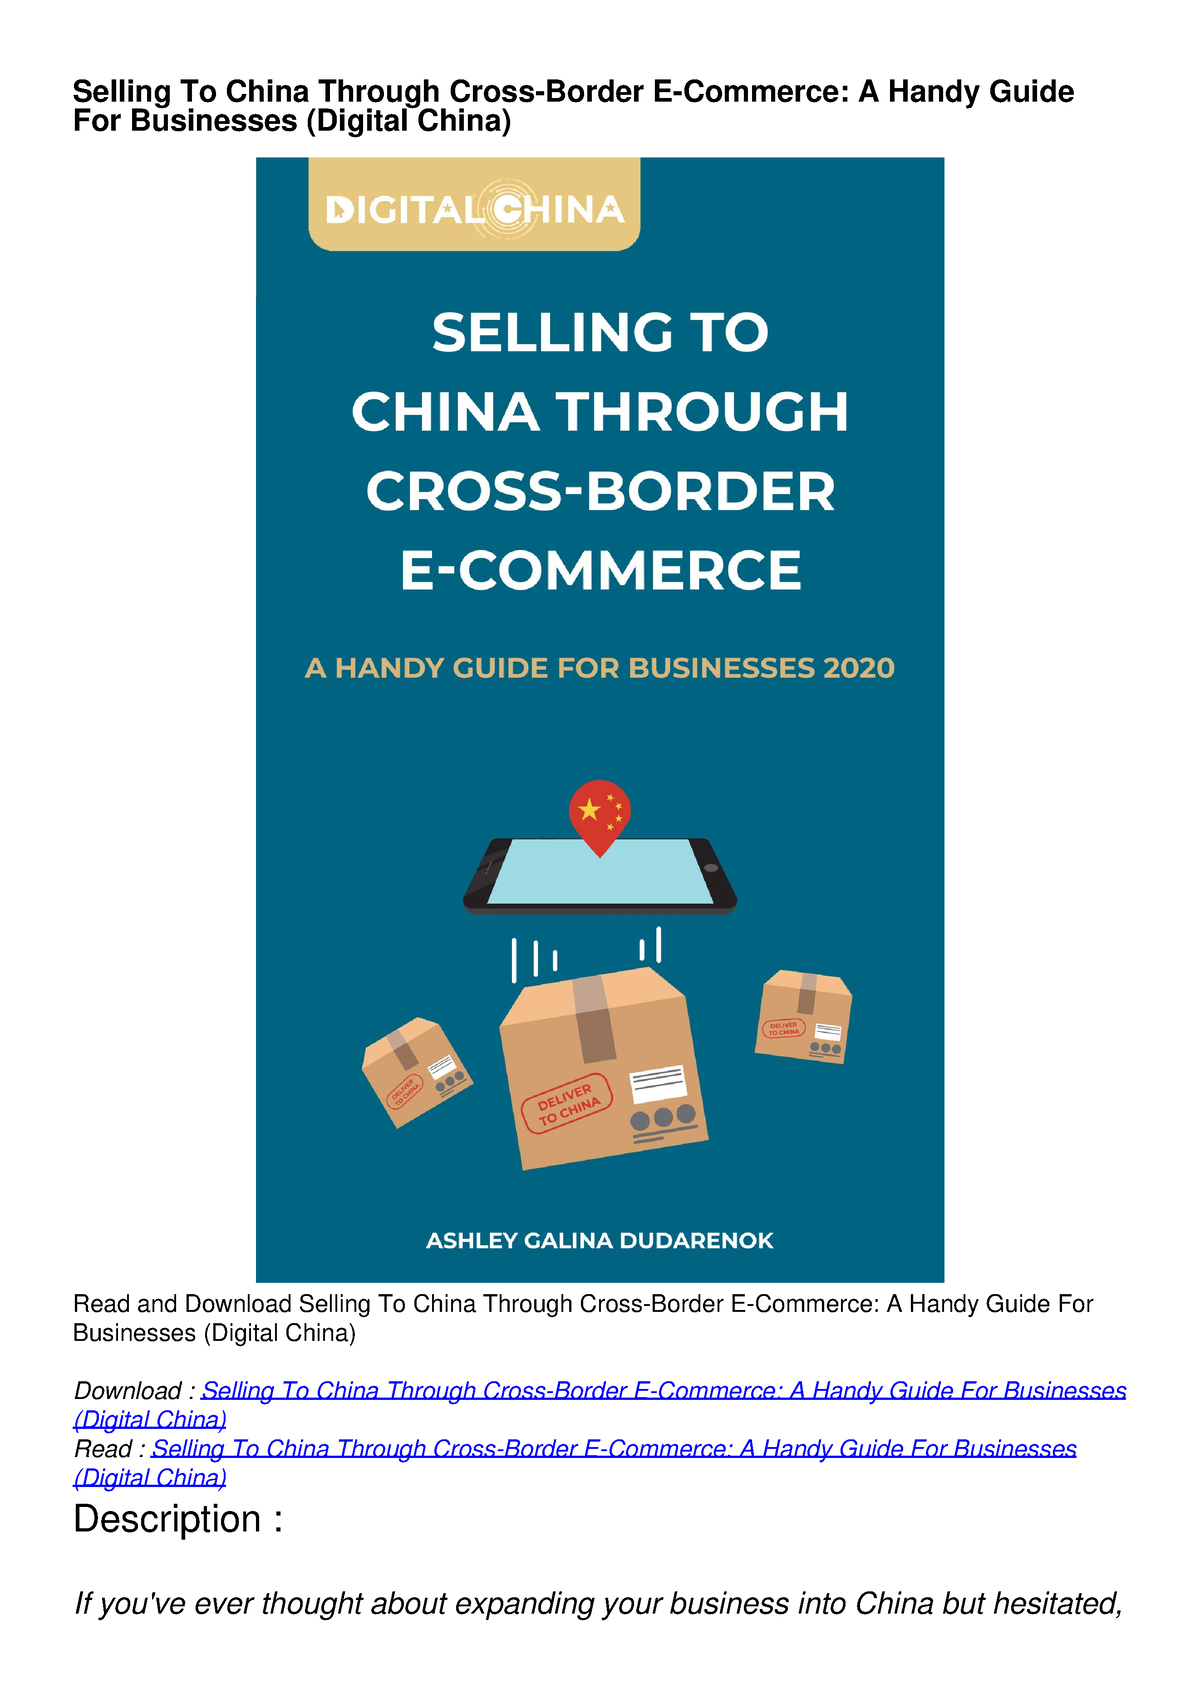 China Cross-Border E-Commerce Guide